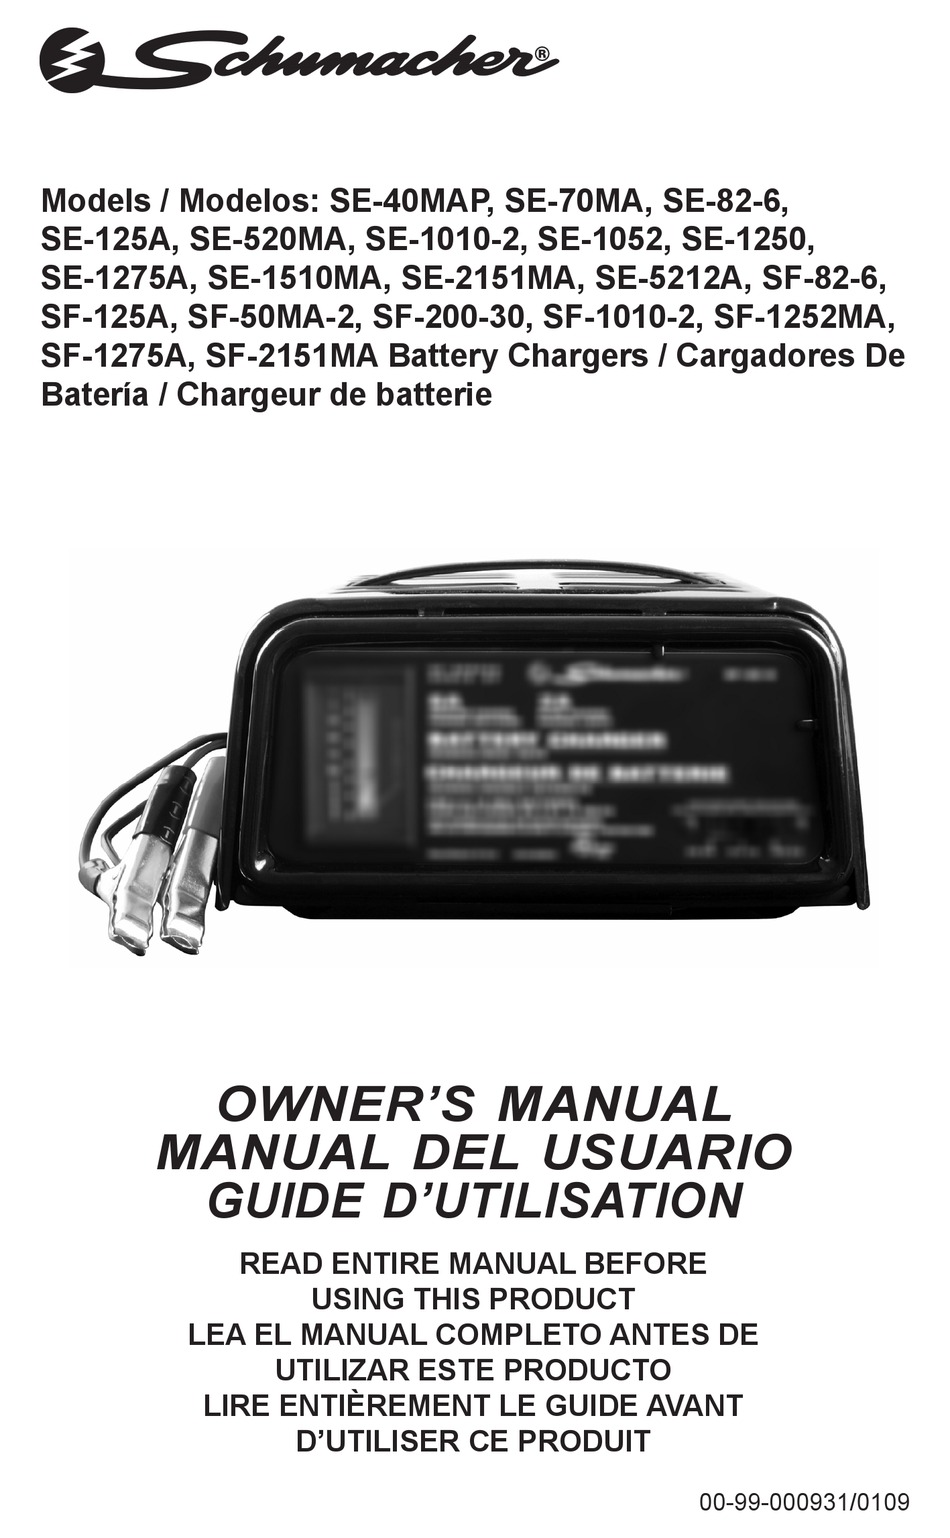 SCHUMACHER ELECTRIC SE-40MAP OWNER'S MANUAL Pdf Download | ManualsLib